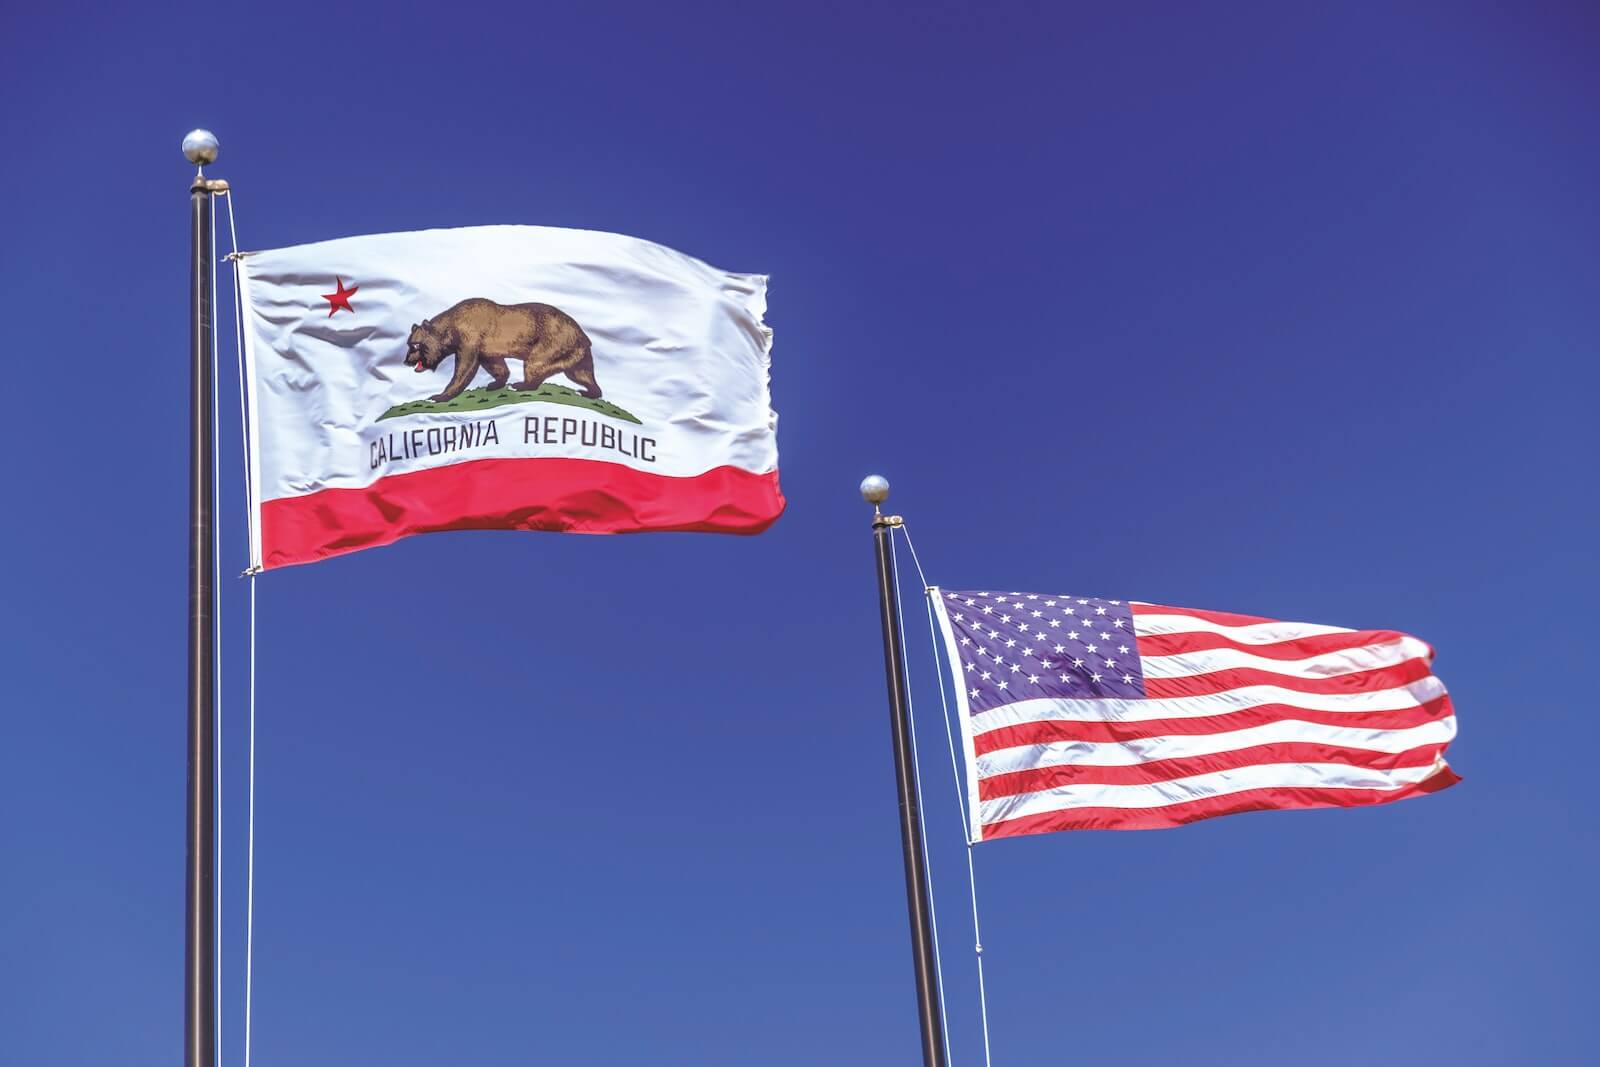 USA and California flags